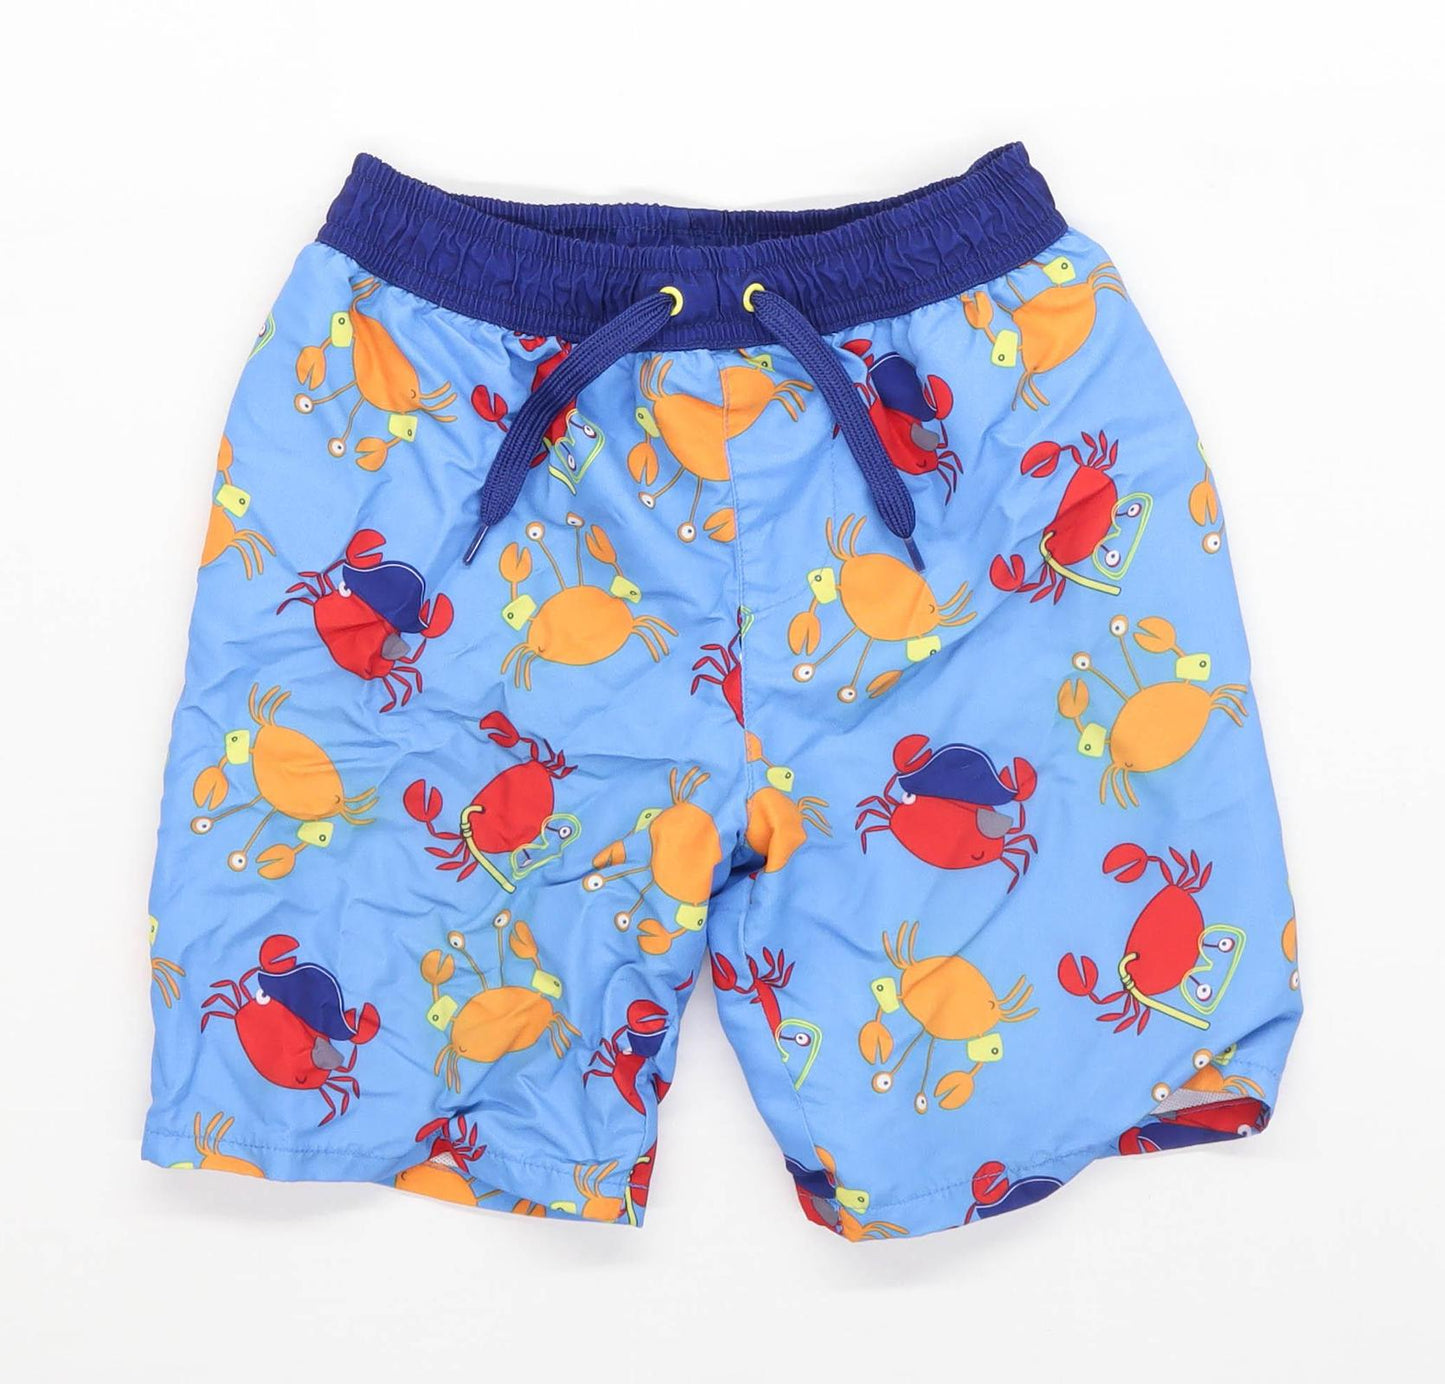 Urban Rascals Boys Graphic Blue Crabs Elasticated Waist Swim Shorts Age 6 Years